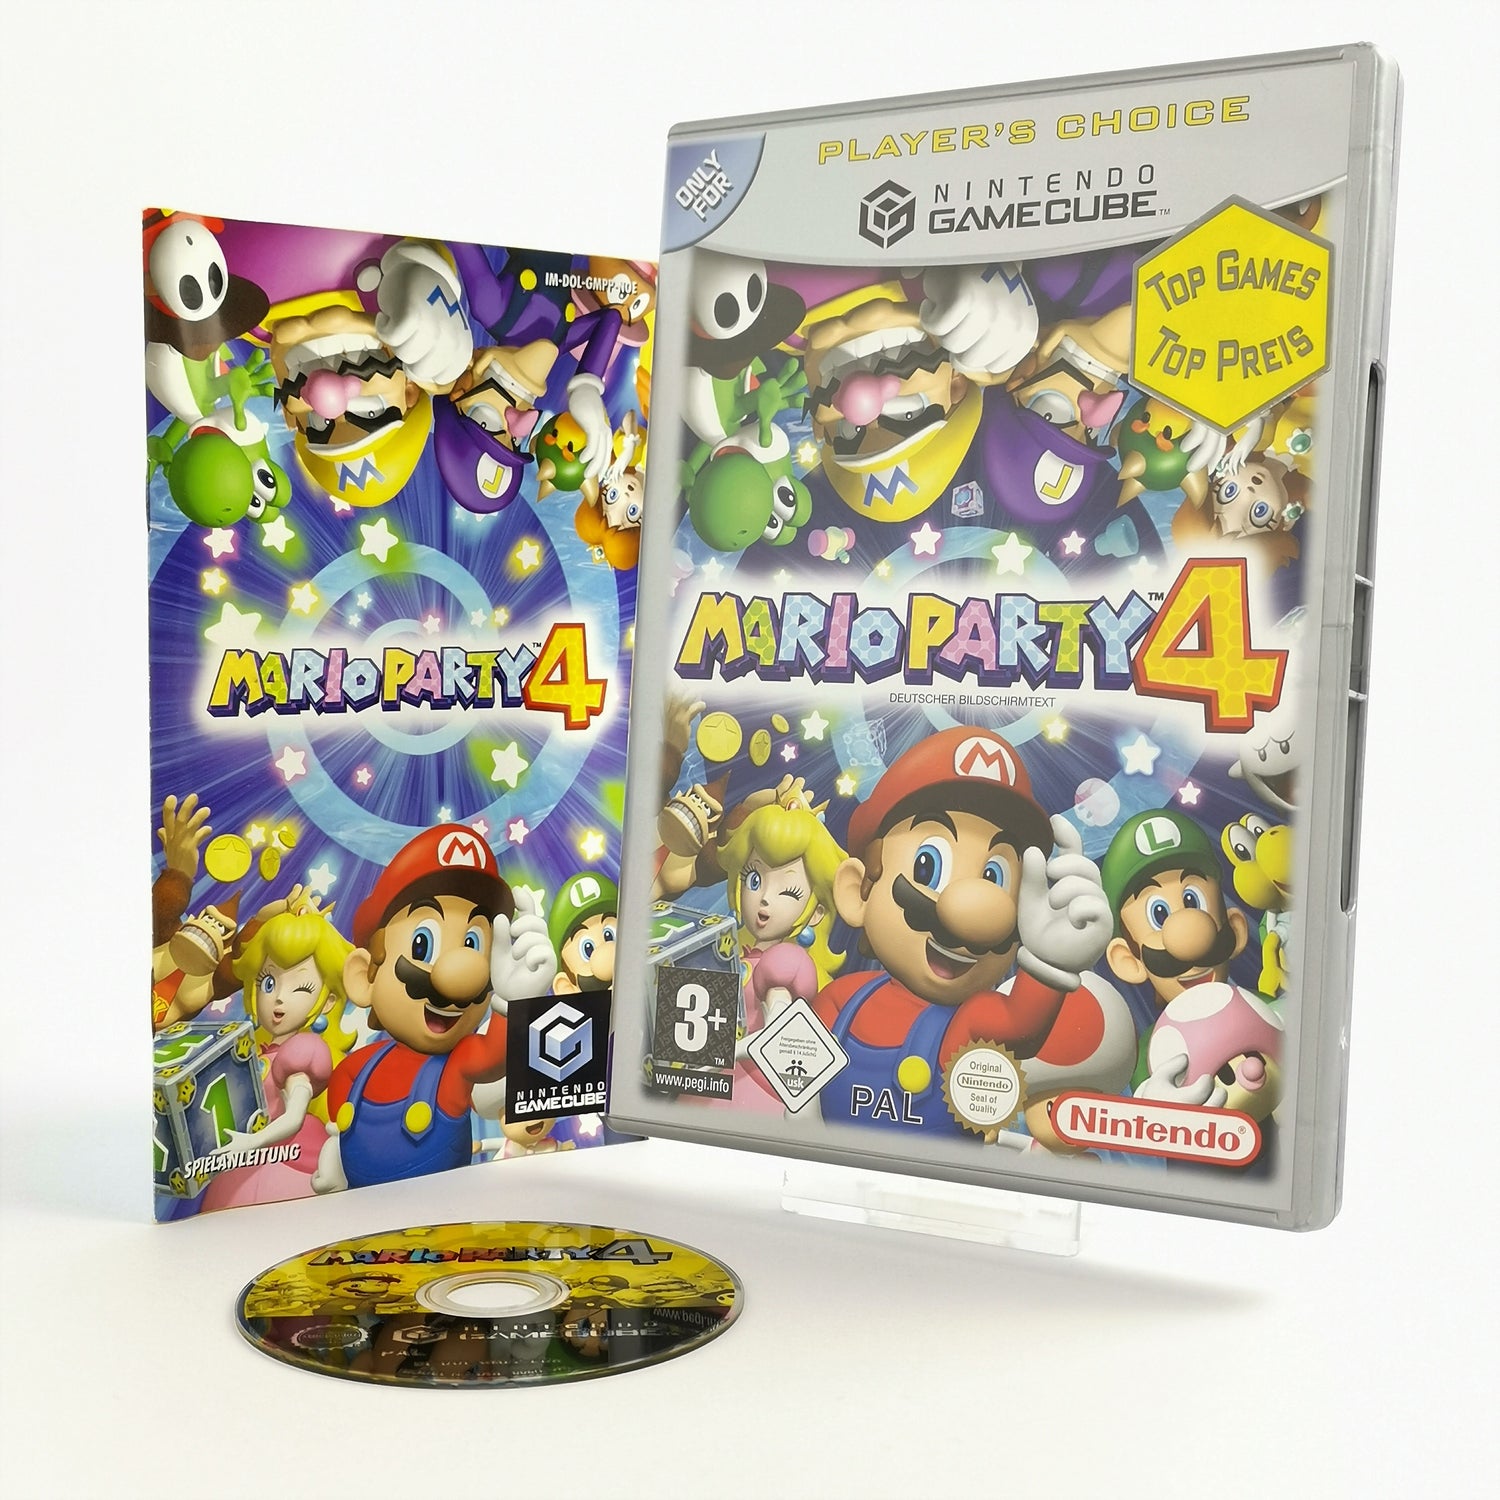 Nintendo Gamecube Game: Mario Party 4 | German PAL version - Players Choice original packaging